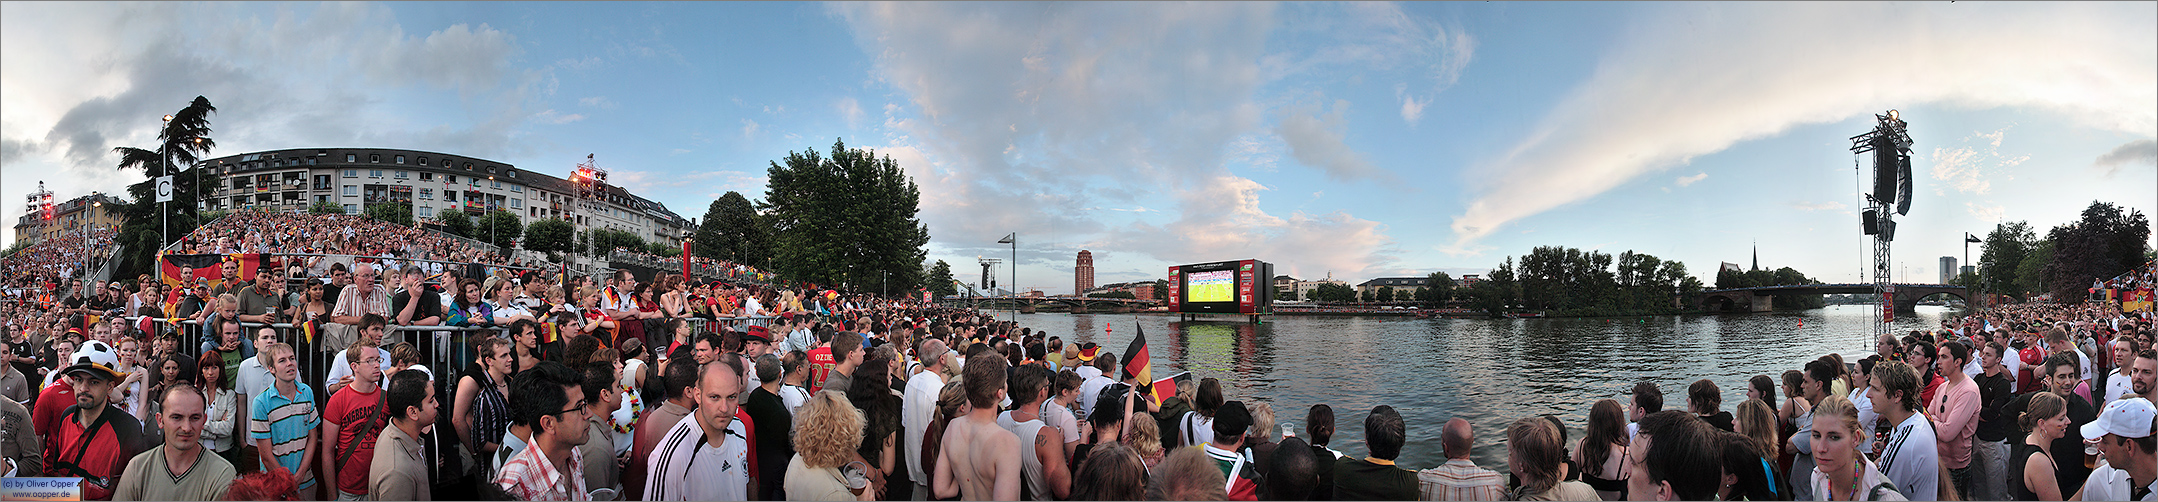 Frankfurt - public viewing - Fuball WM2006 - p128 - (c) by Oliver Opper